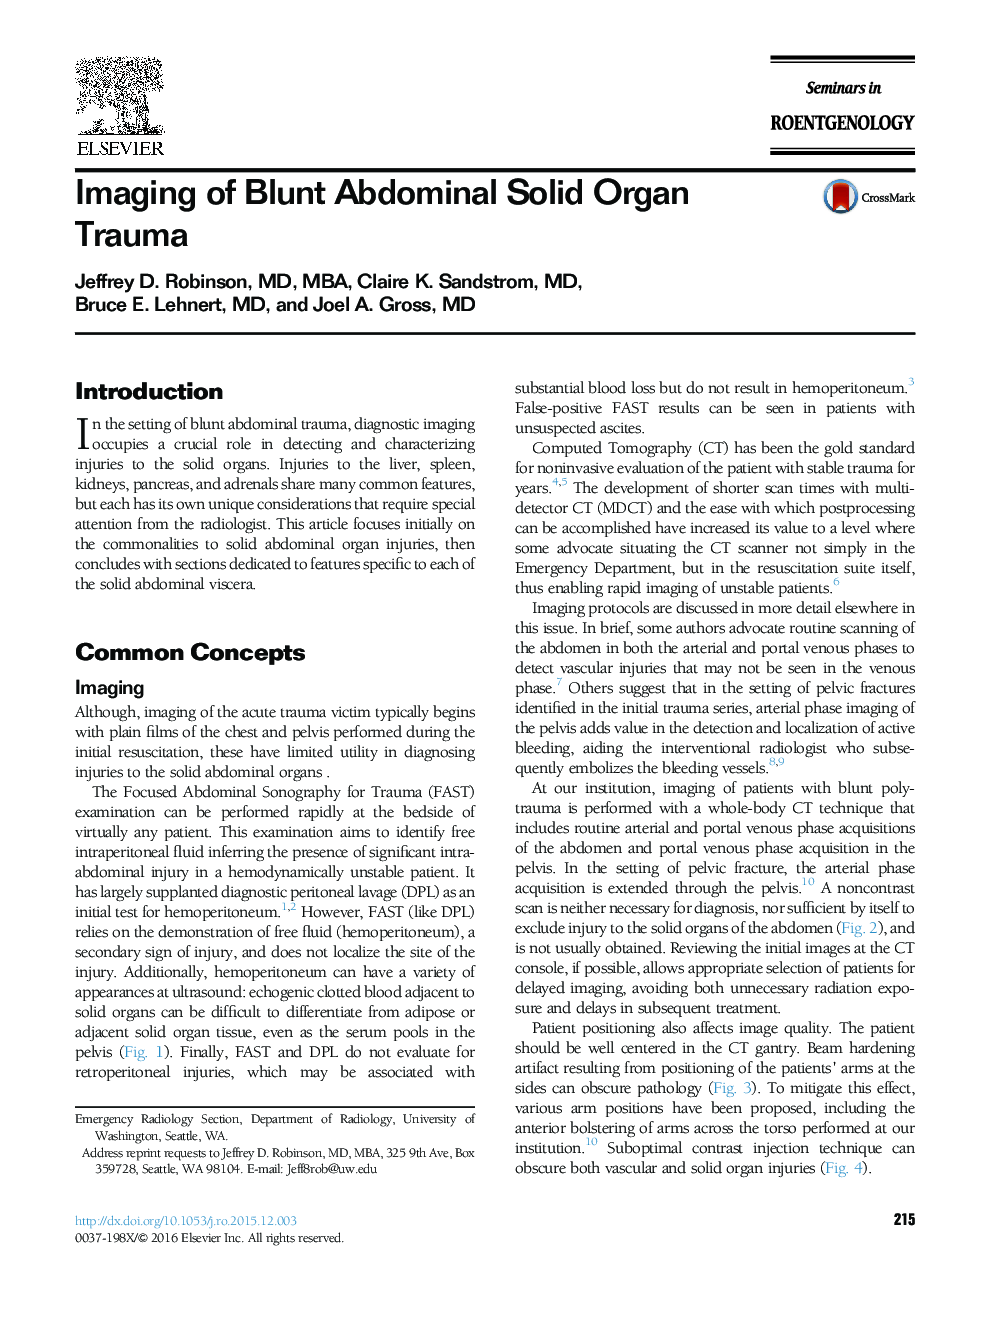 Imaging of Blunt Abdominal Solid Organ Trauma